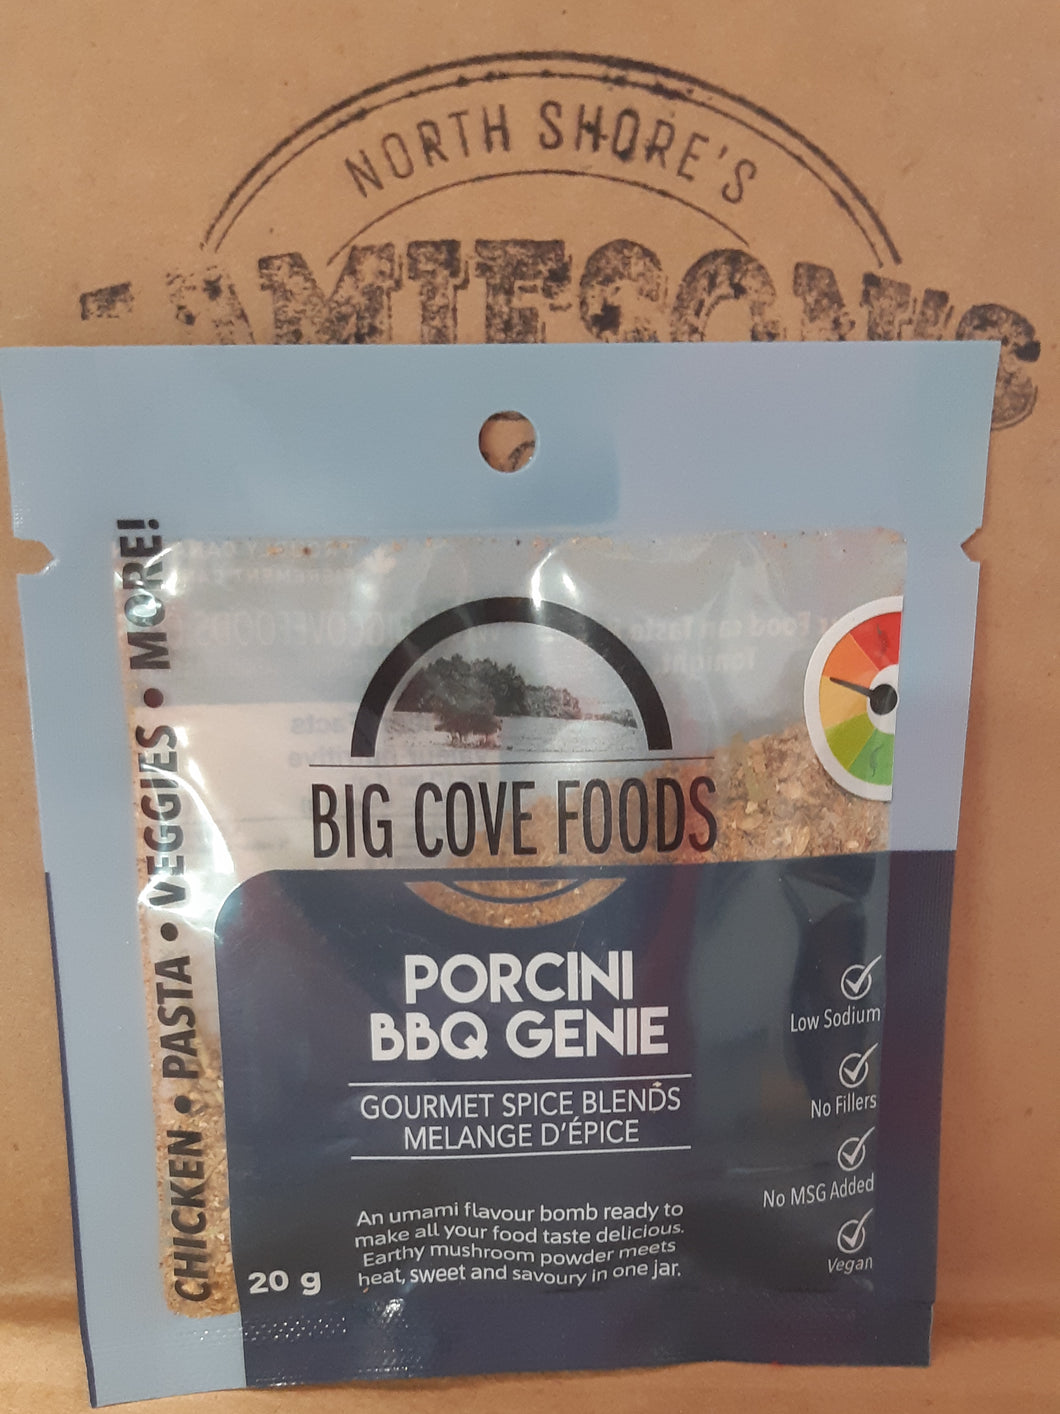 Porcini BBQ Genie packet - Big Cove Foods 20 g